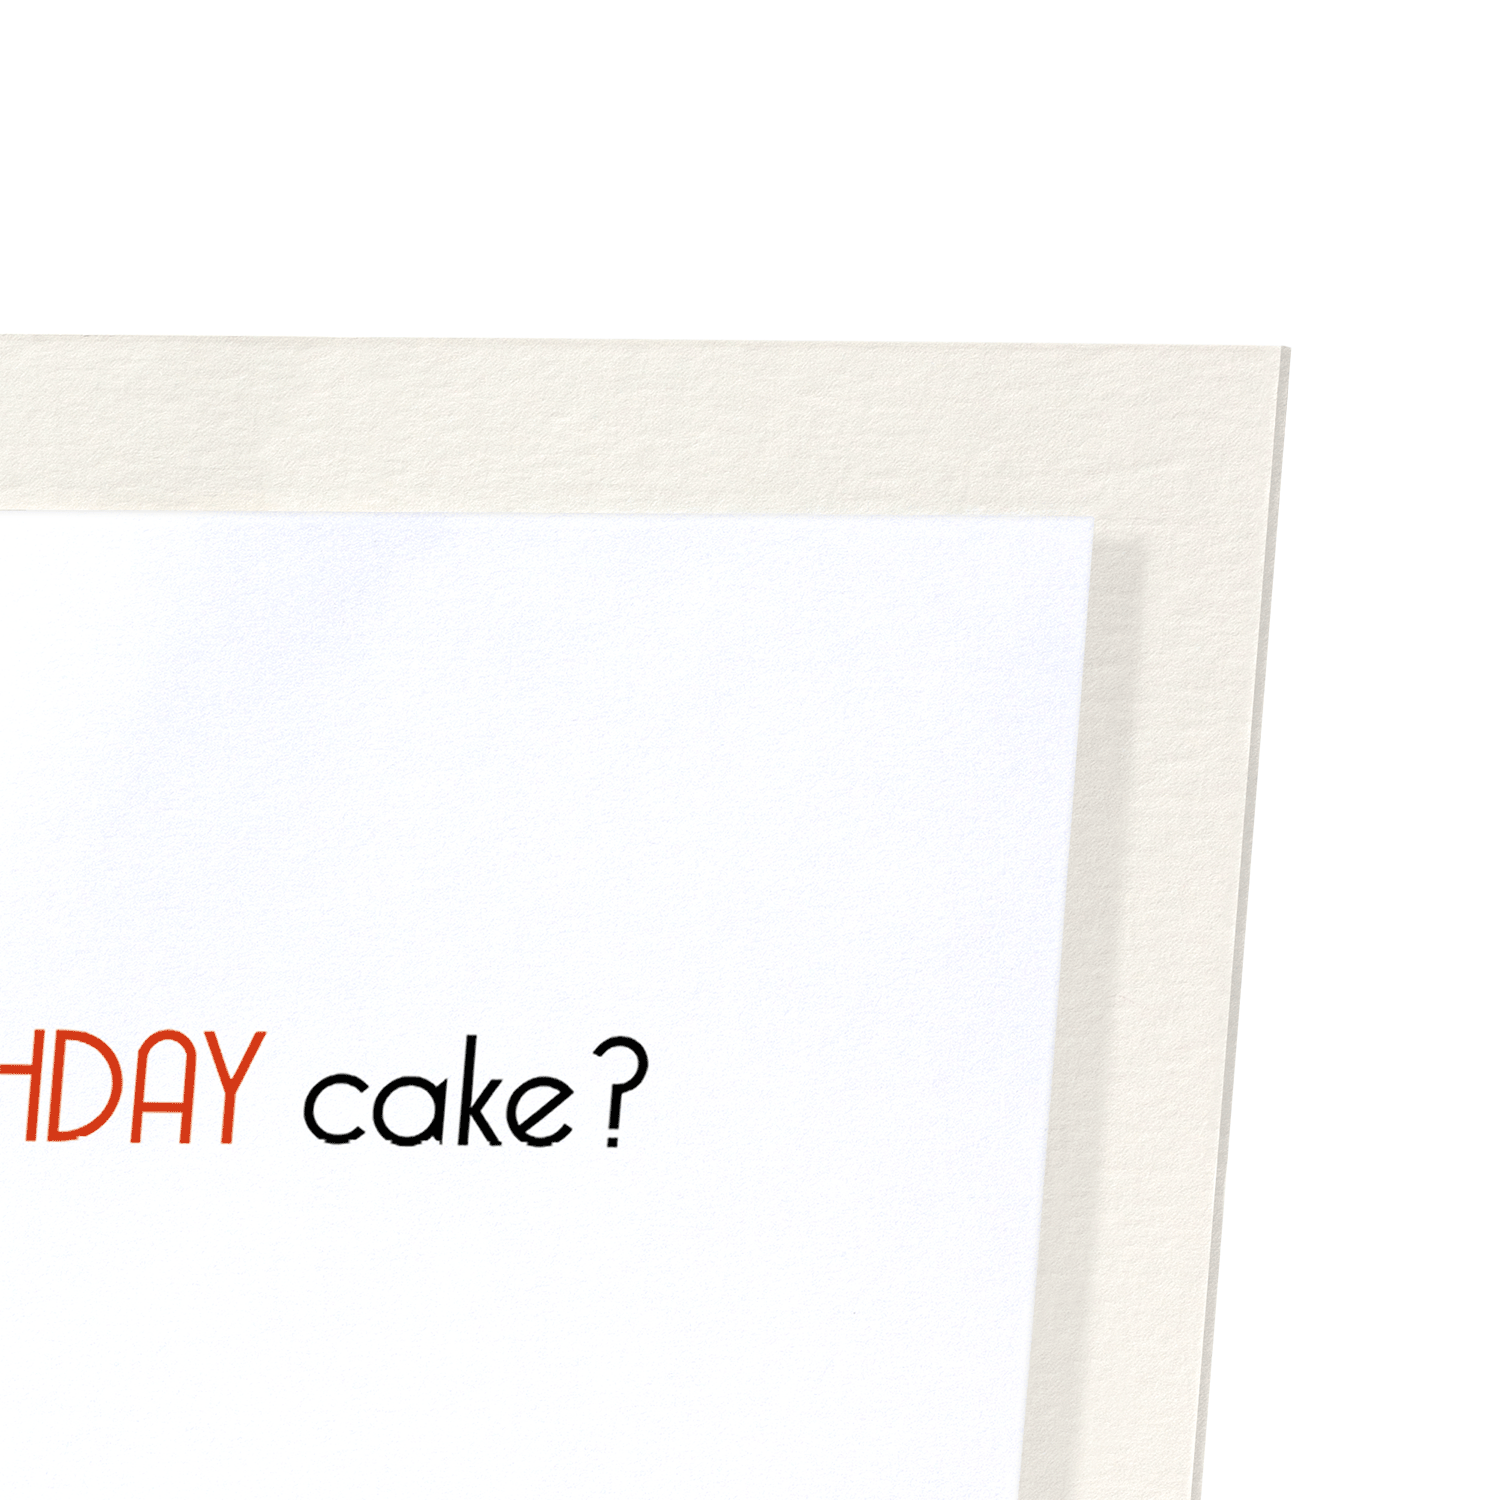 DO I SMELL BIRTHDAY CAKE?: Funny Animal Art print